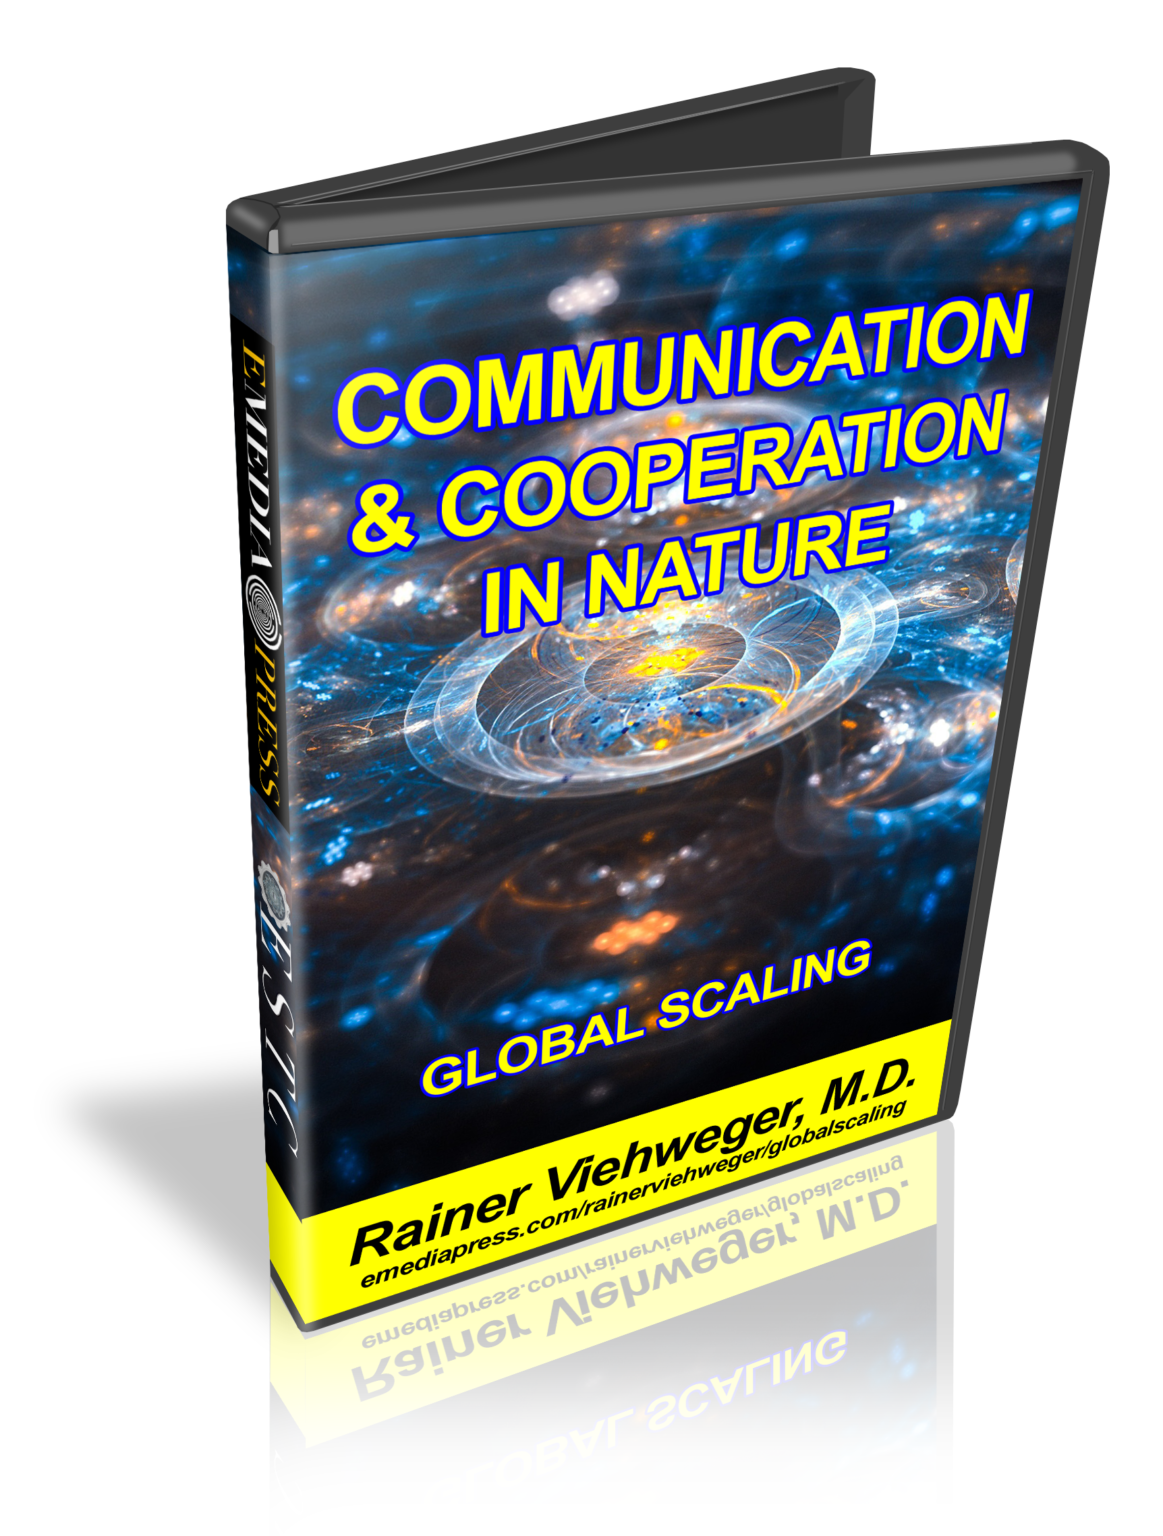 Communication & Cooperation in Nature by Rainer Viehweger